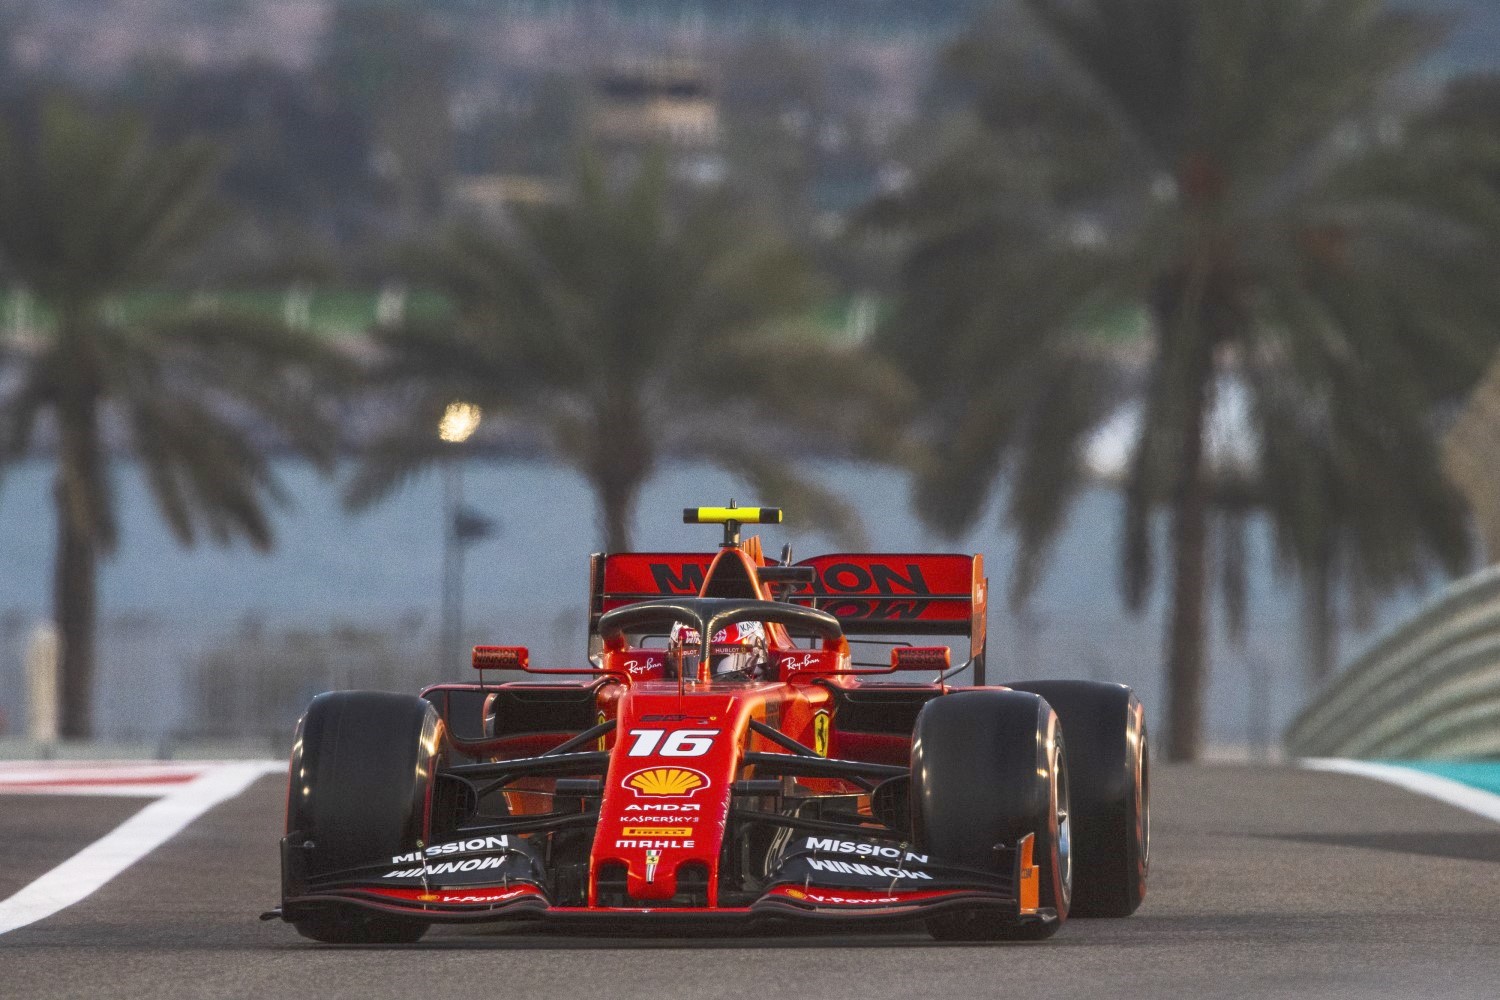 Will Ferrari be sucking Mercedes' exhaust again on 2020?